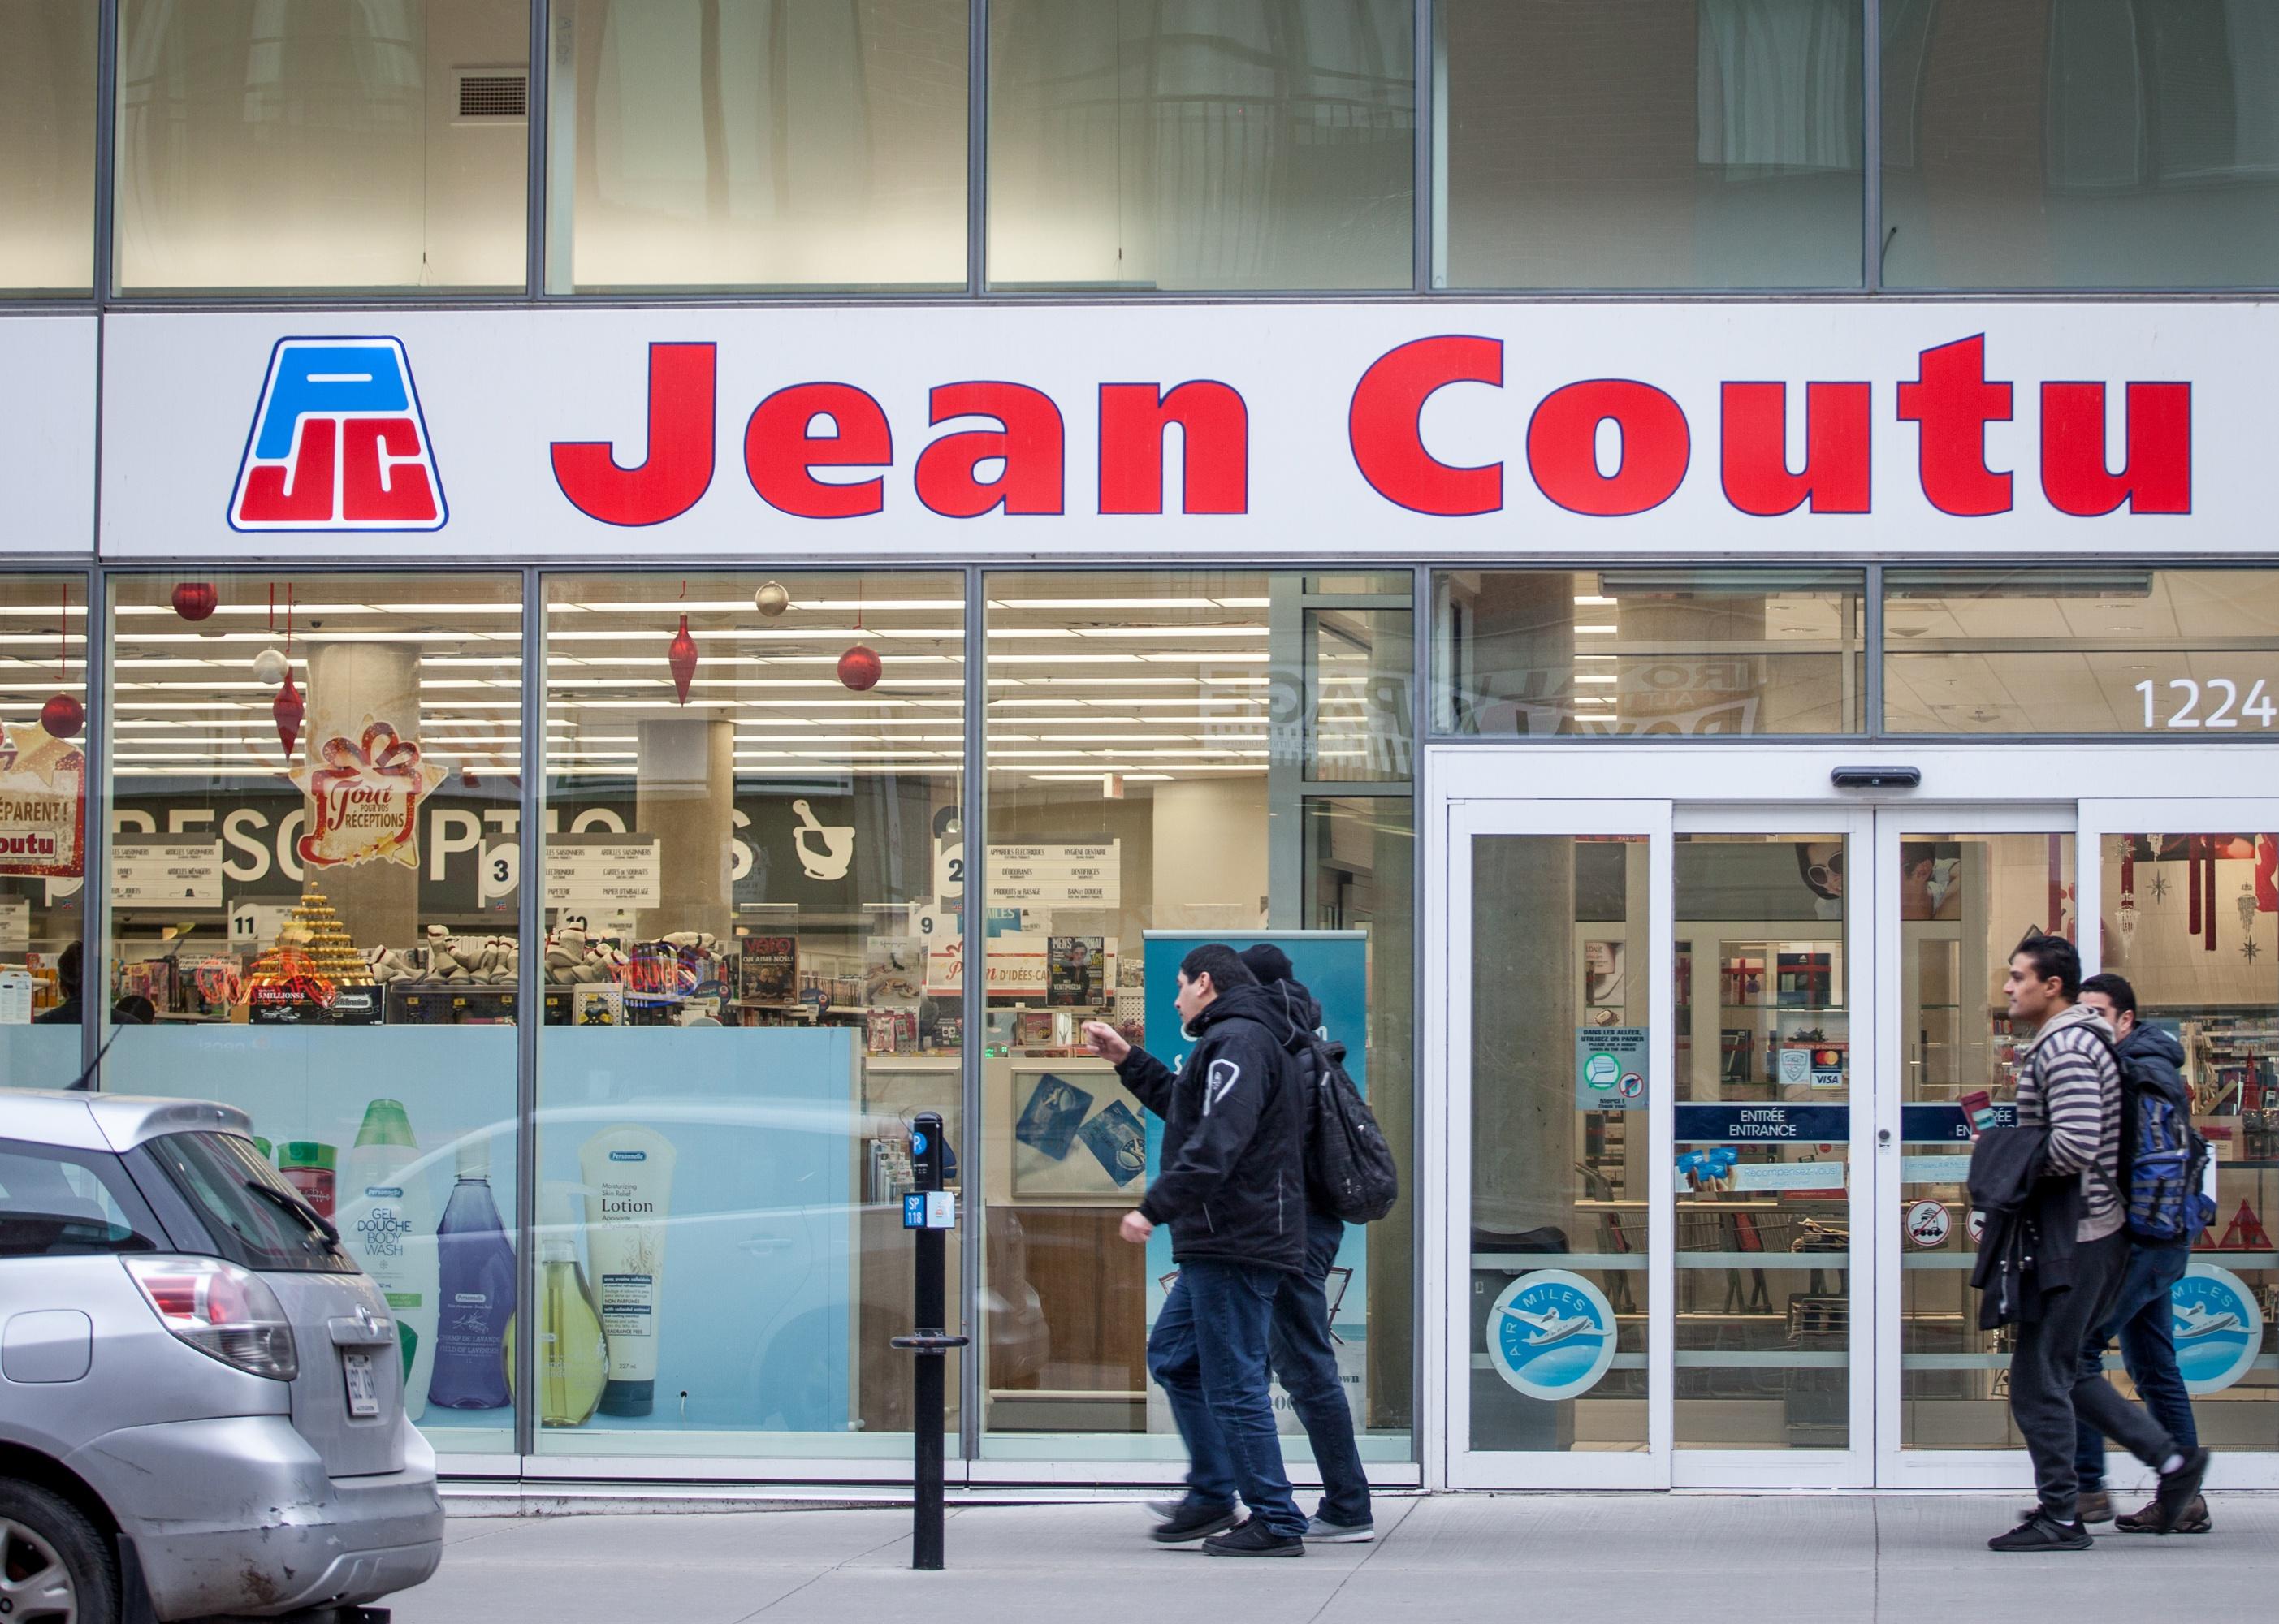 Pharmacie Jean Coutu logo on their main shop for Montreal